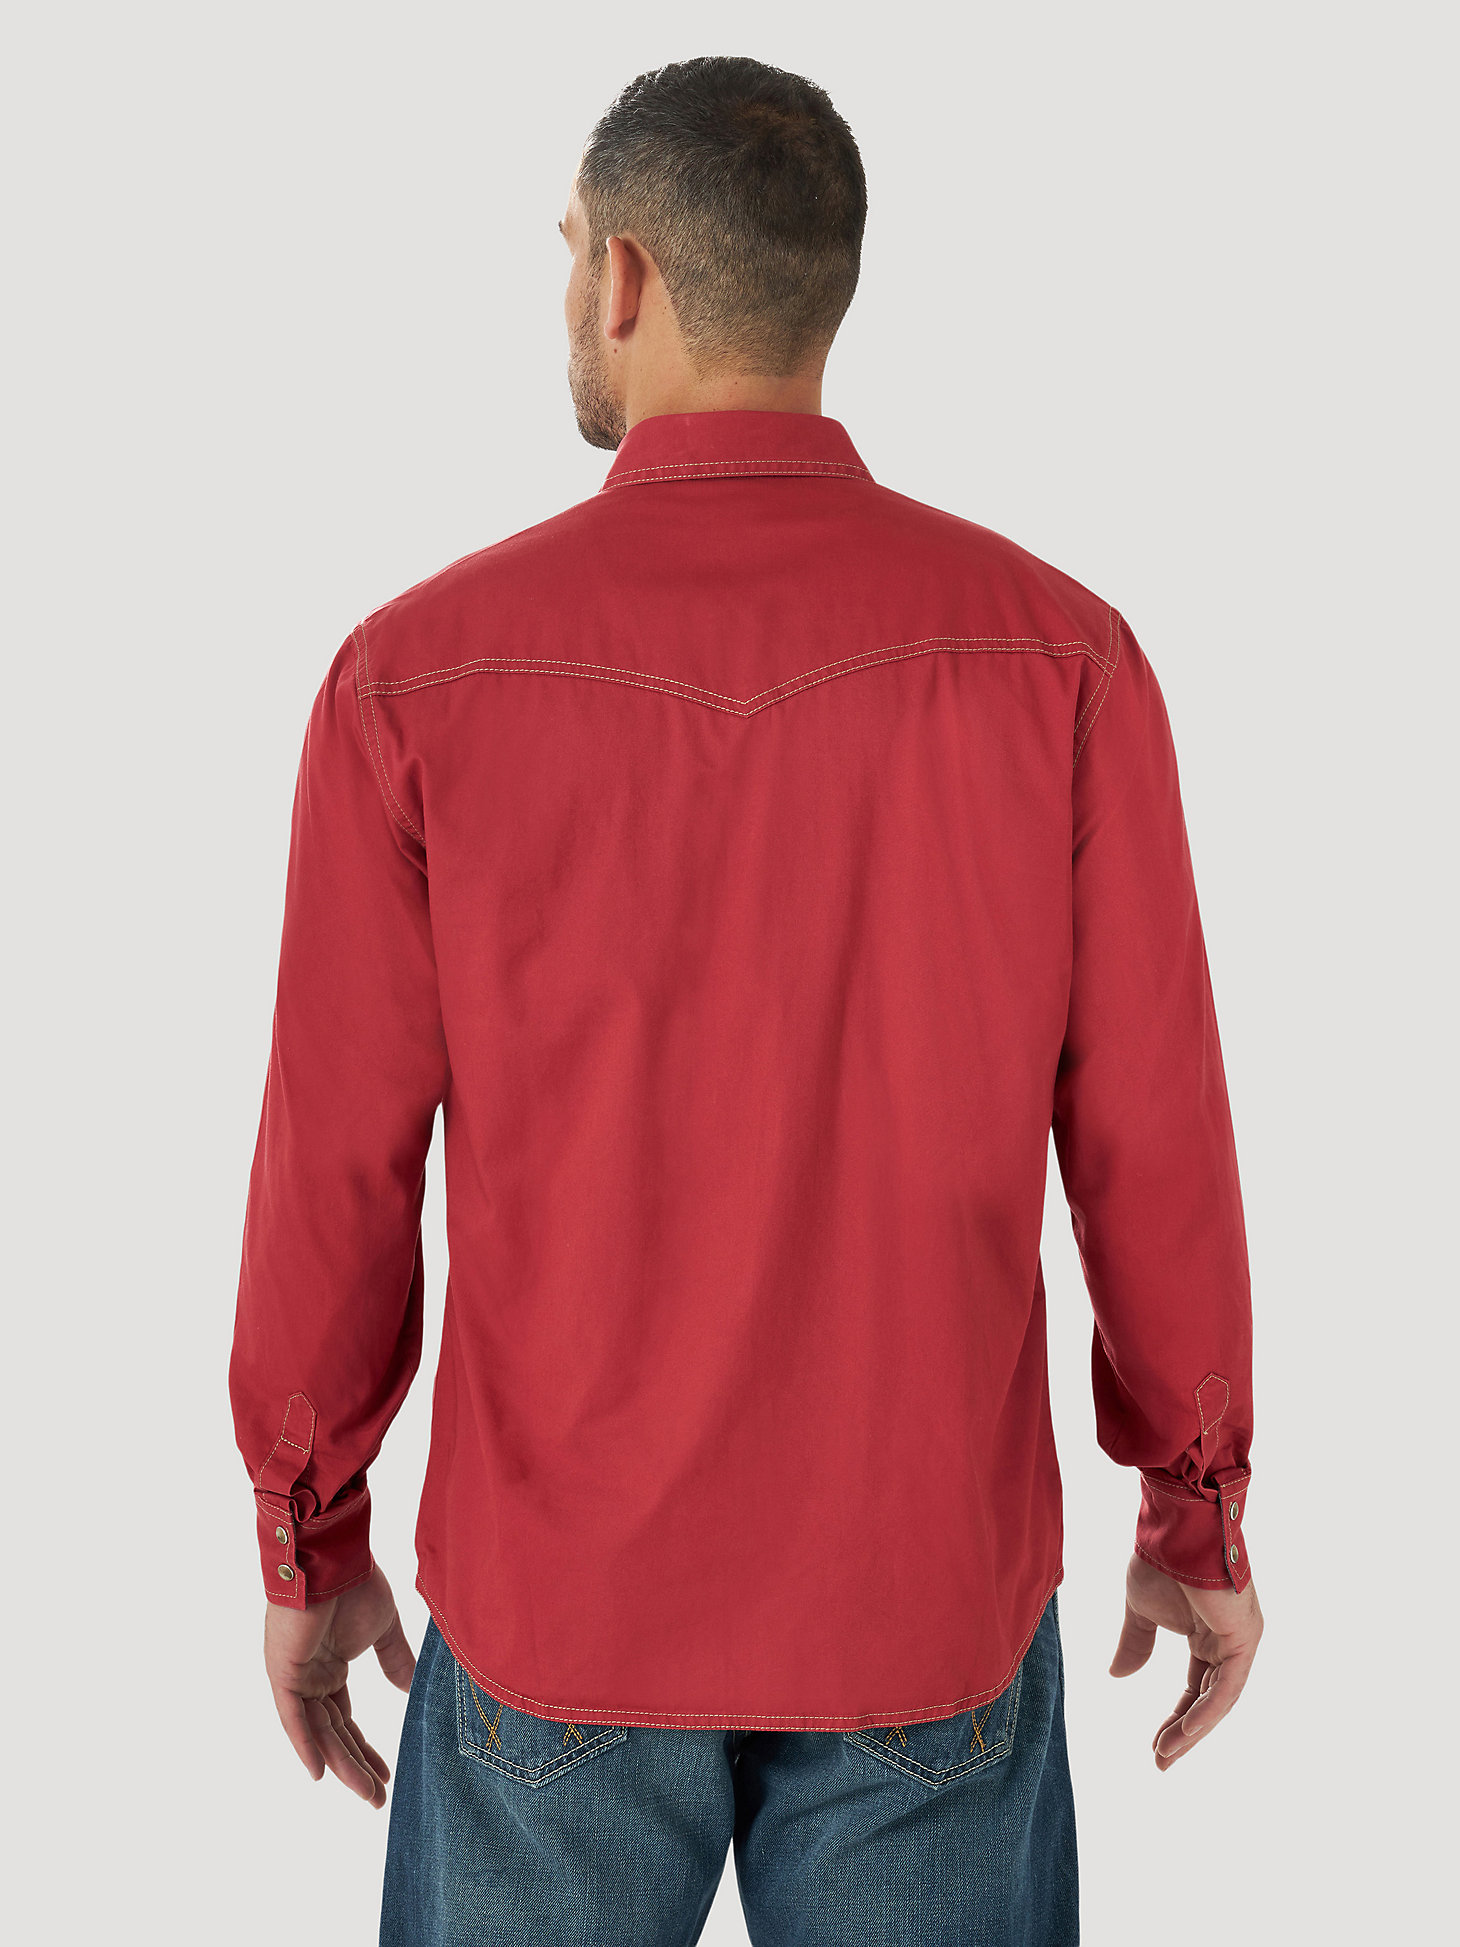 Men's Wrangler Retro Premium Contrast Trim Western Snap Flap Pocket Solid Shirt in Red alternative view 1